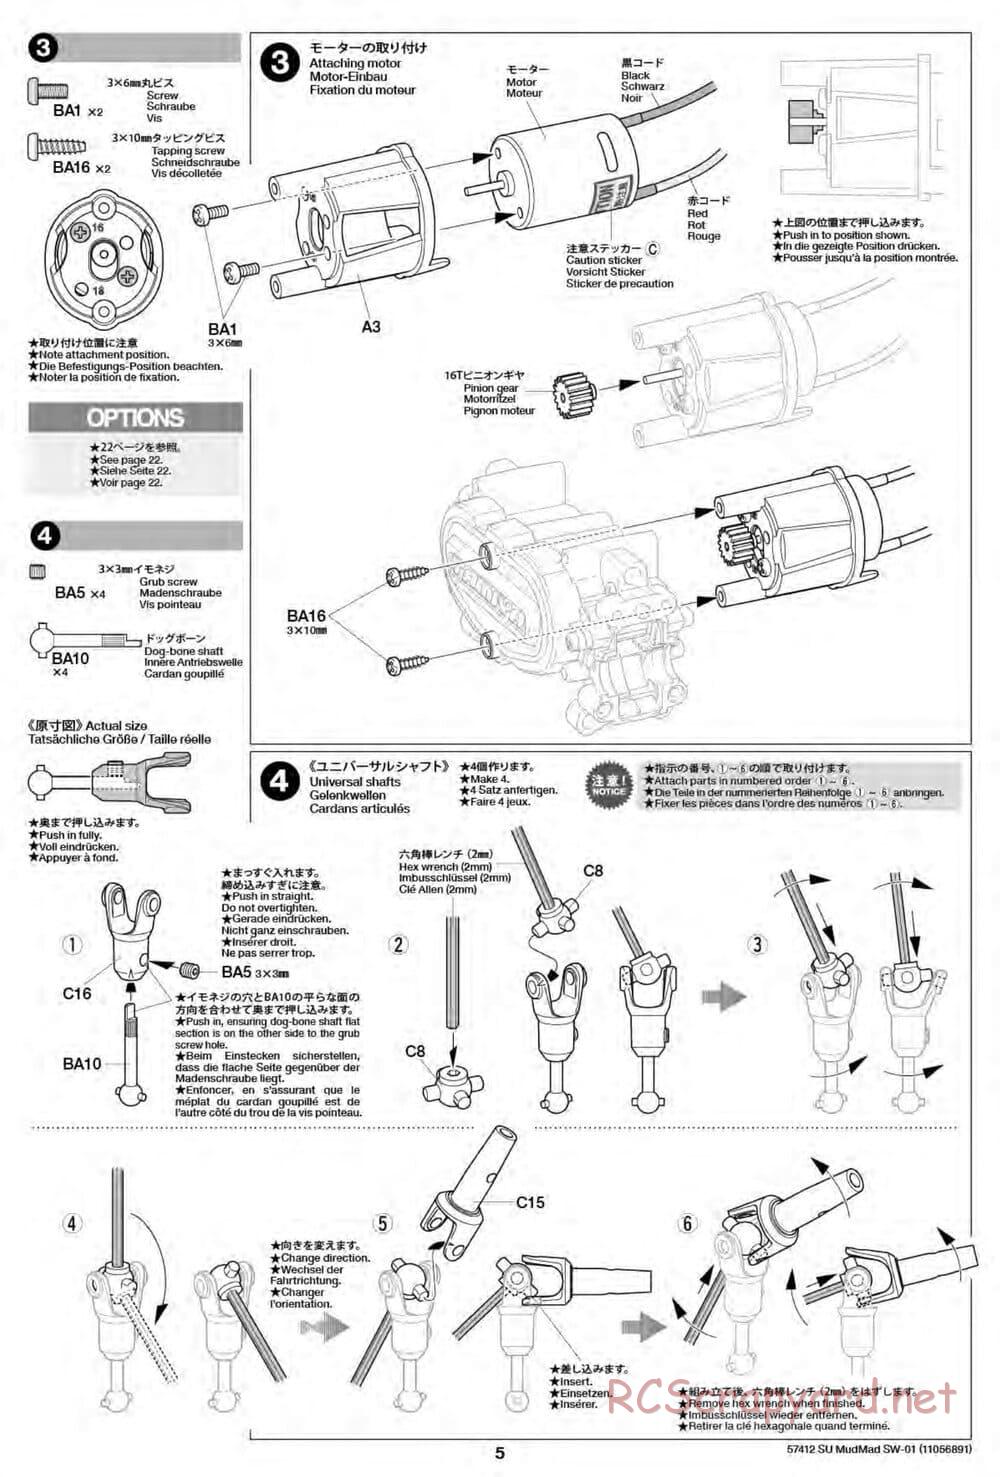 Tamiya - MudMad - SW-01 Chassis - Manual - Page 5